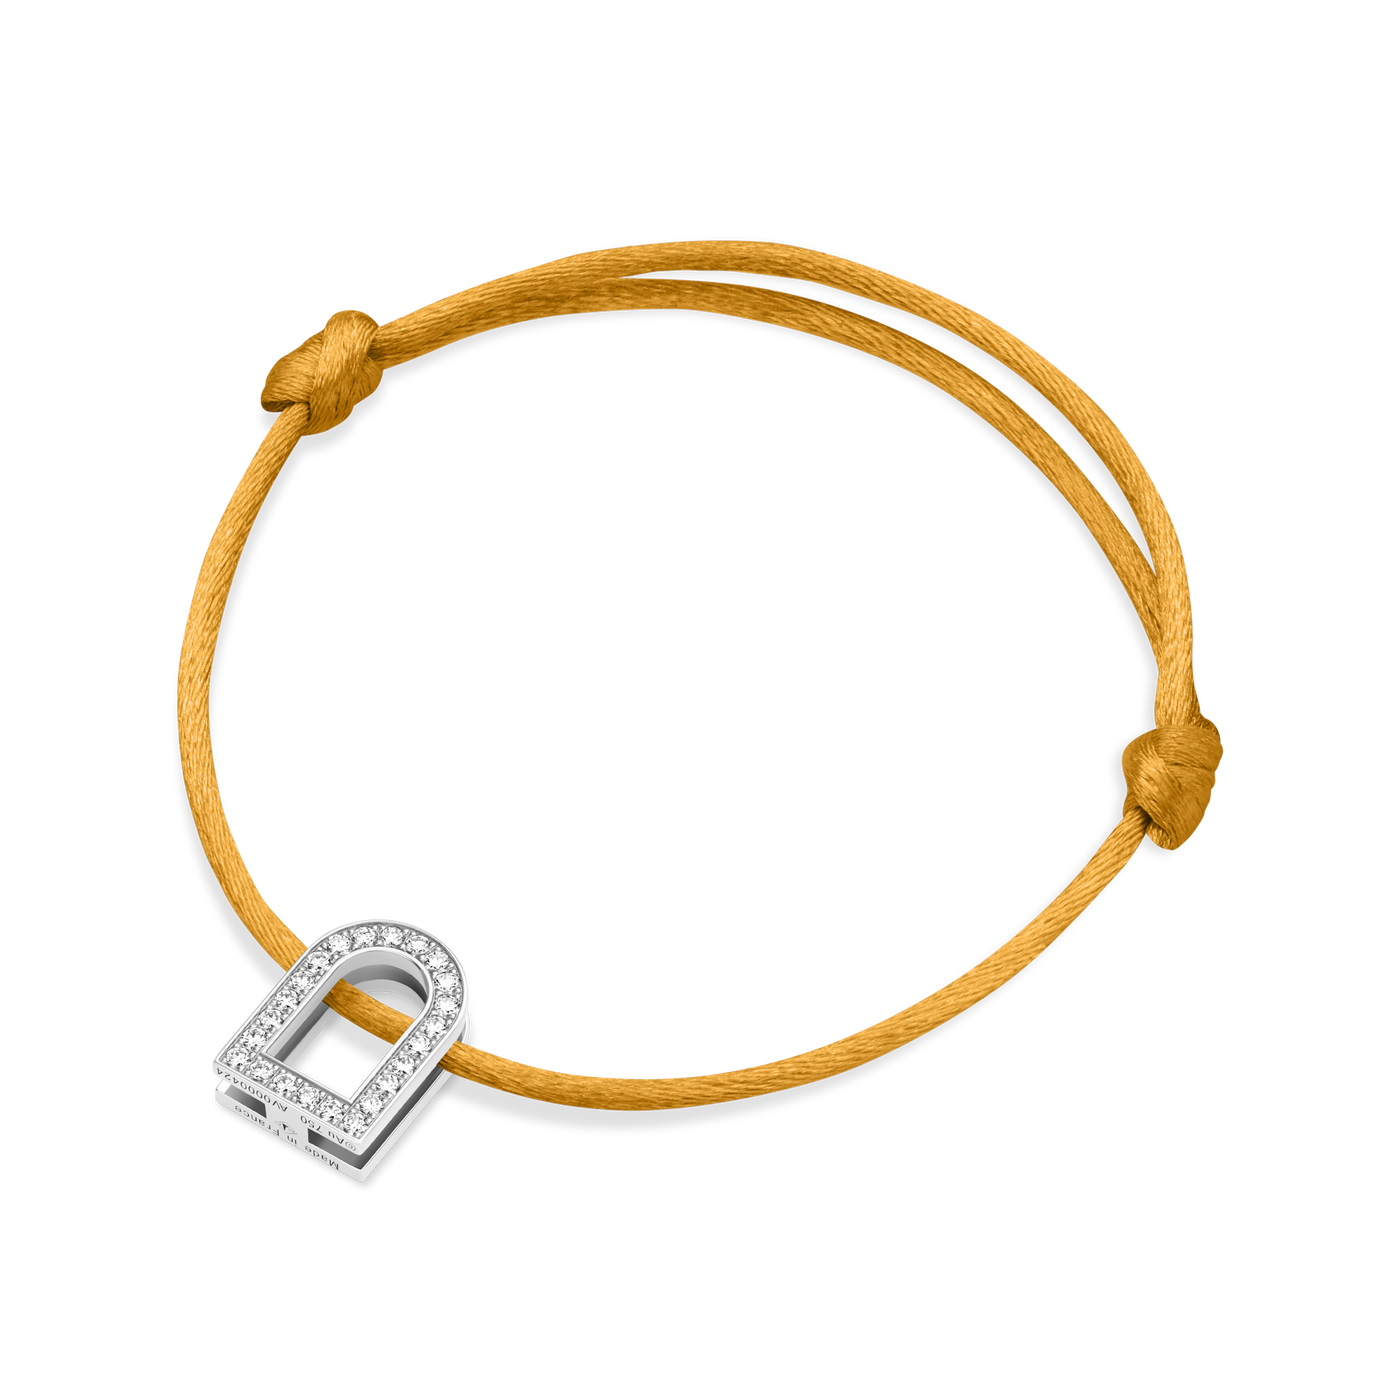 L'Arc Voyage Charm GM, 18k White Gold with Galerie Diamonds on Silk Cord Bracelet - DAVIDOR